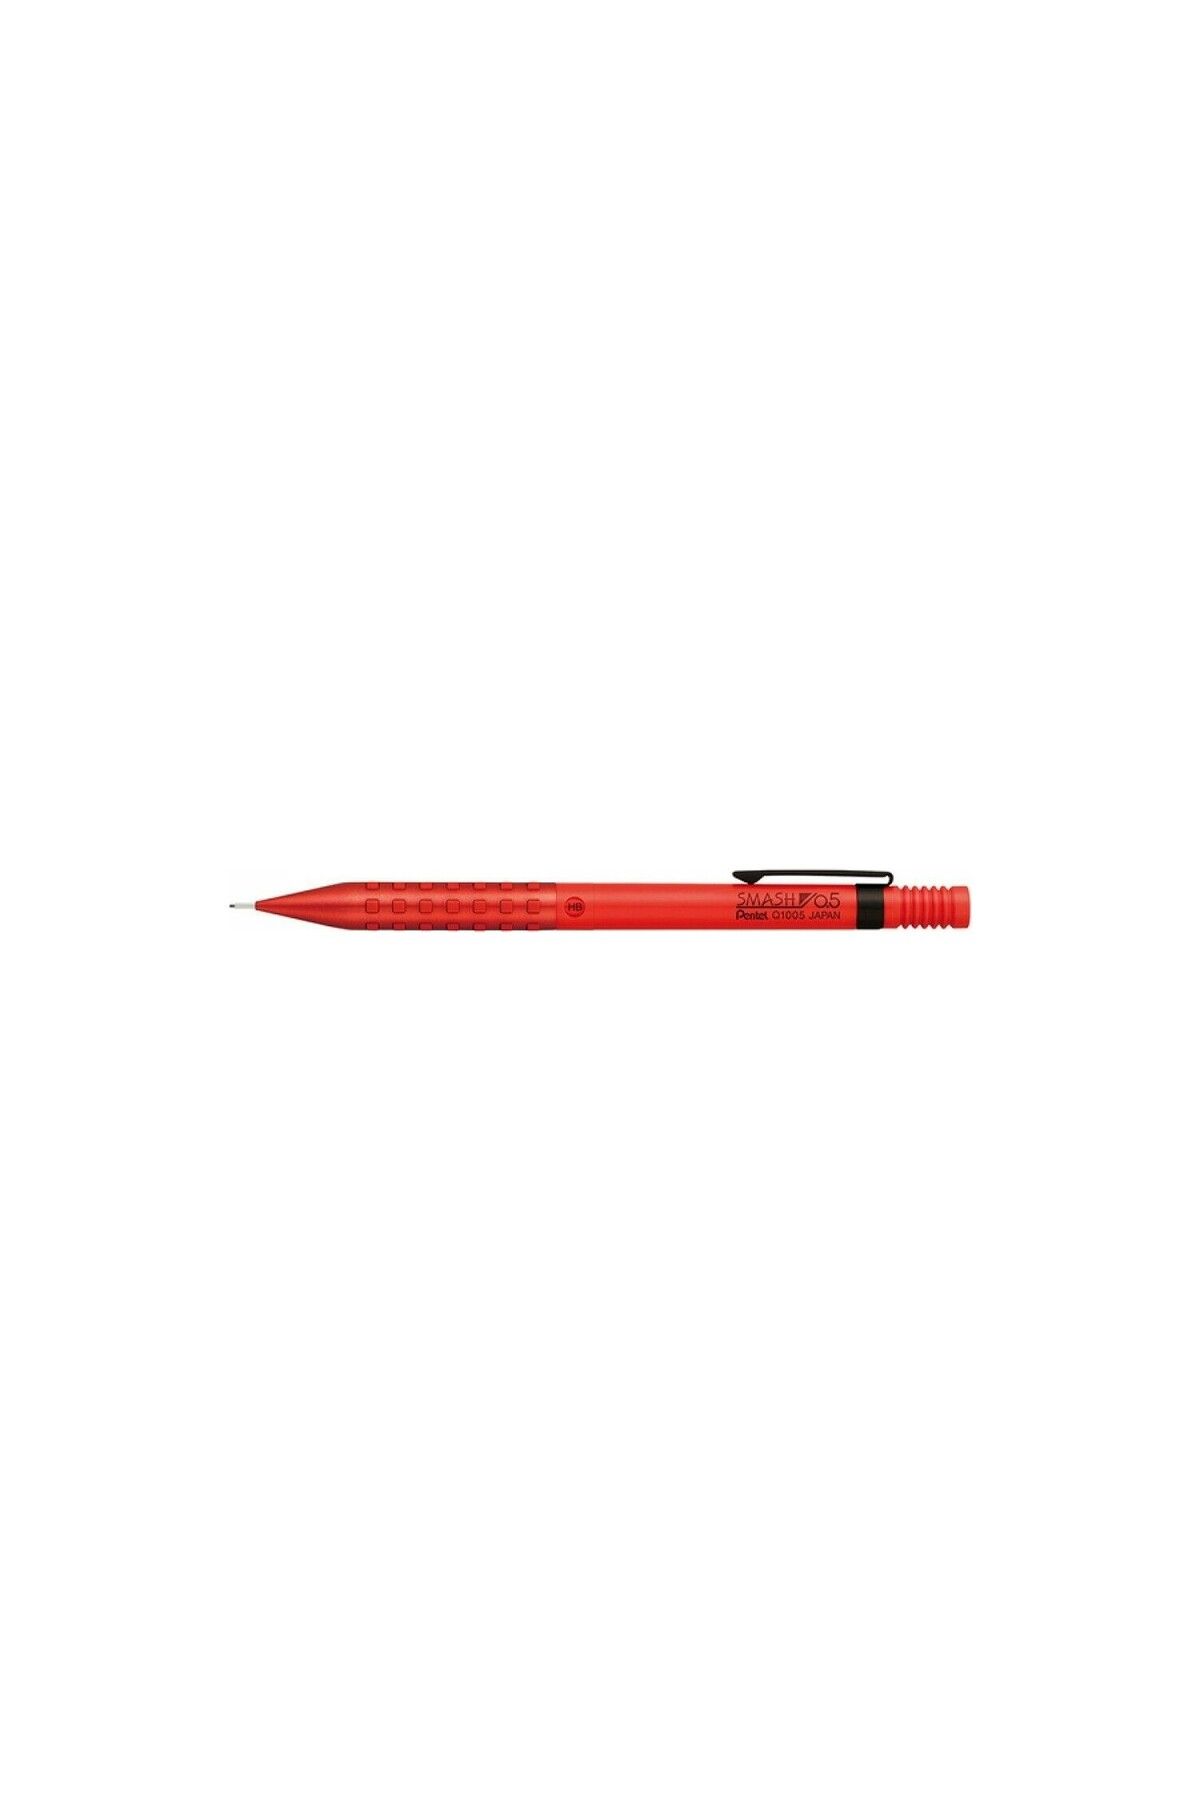 sommeow Q1005 Teknik Çizim Kalemi 0.5 Mm Metalik Kırmızı